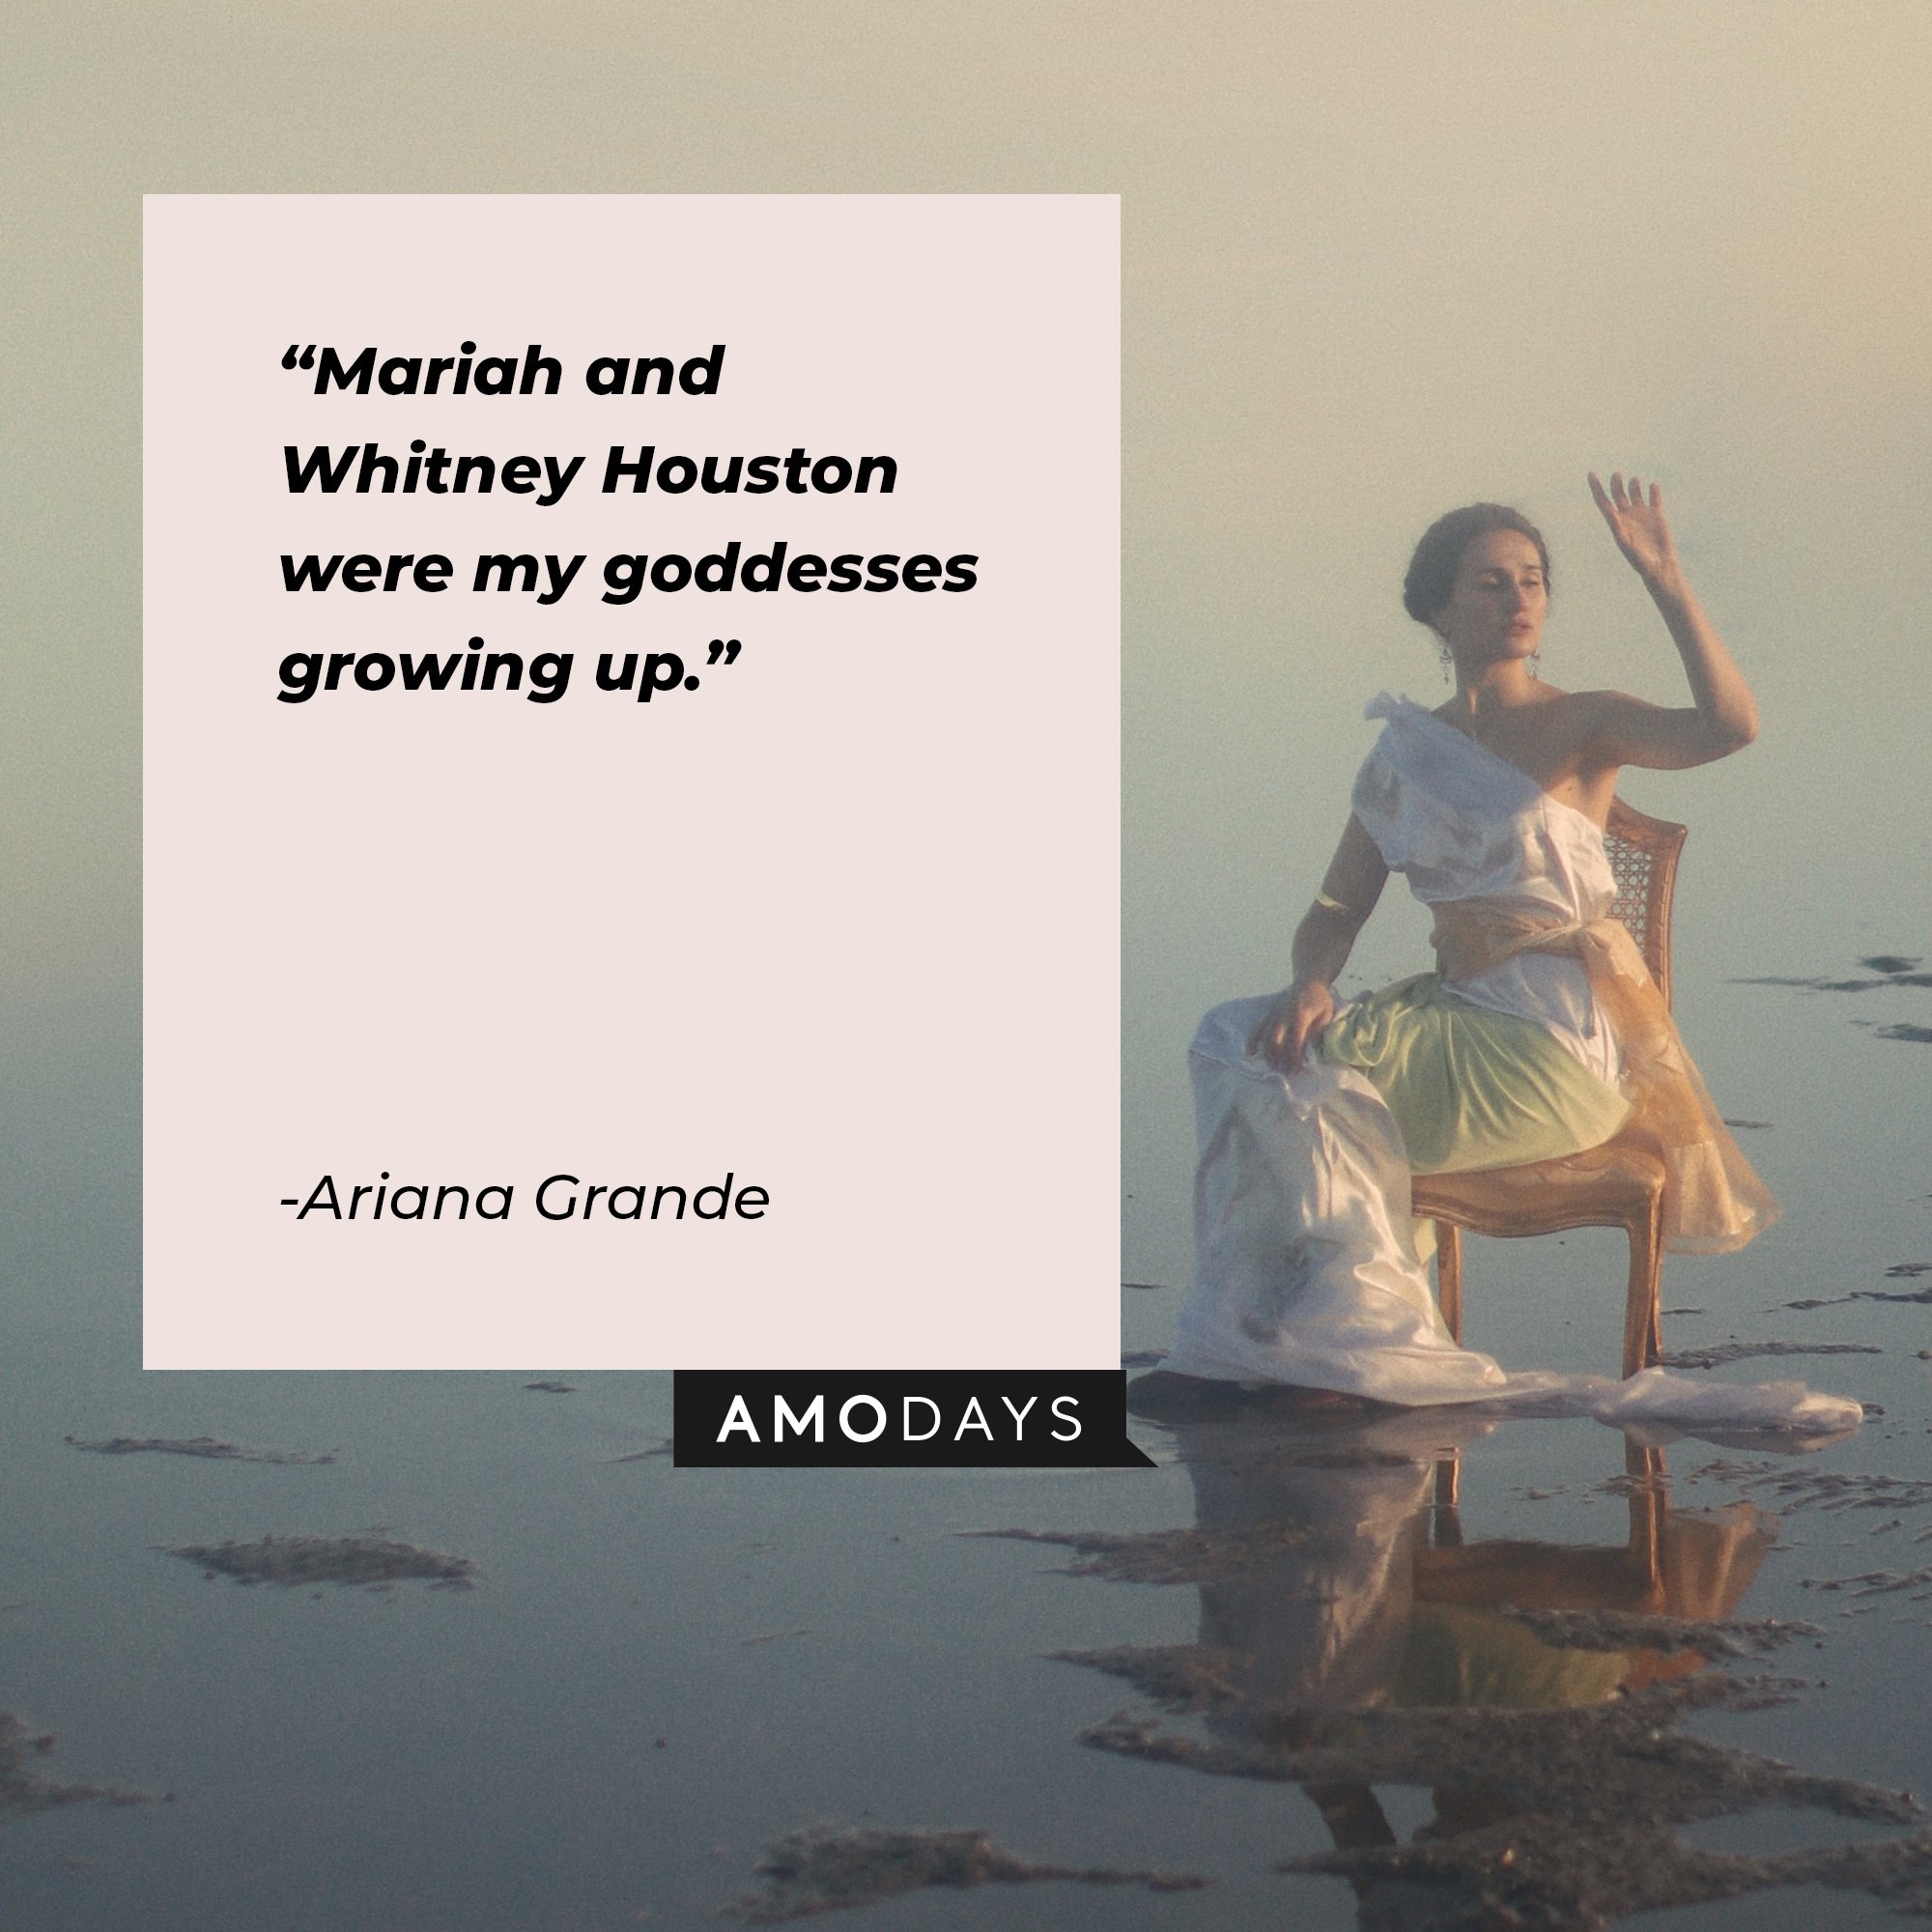   Ariana Grande’s quote: "Mariah and Whitney Houston were my goddesses growing up." | Image: AmoDays